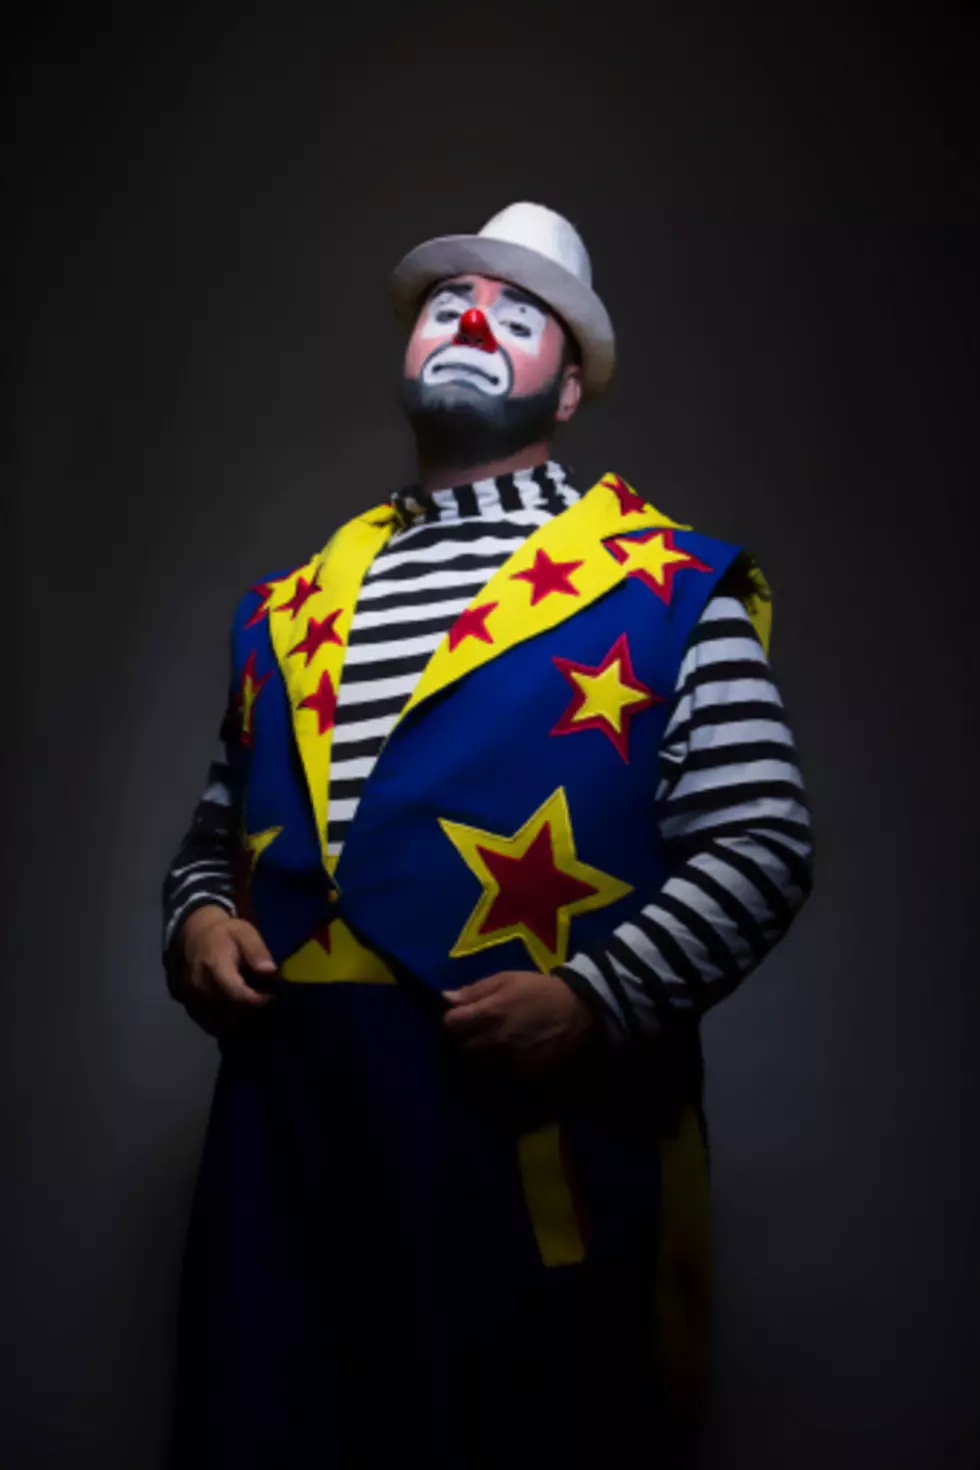 Clown Shortage = More Jobs!